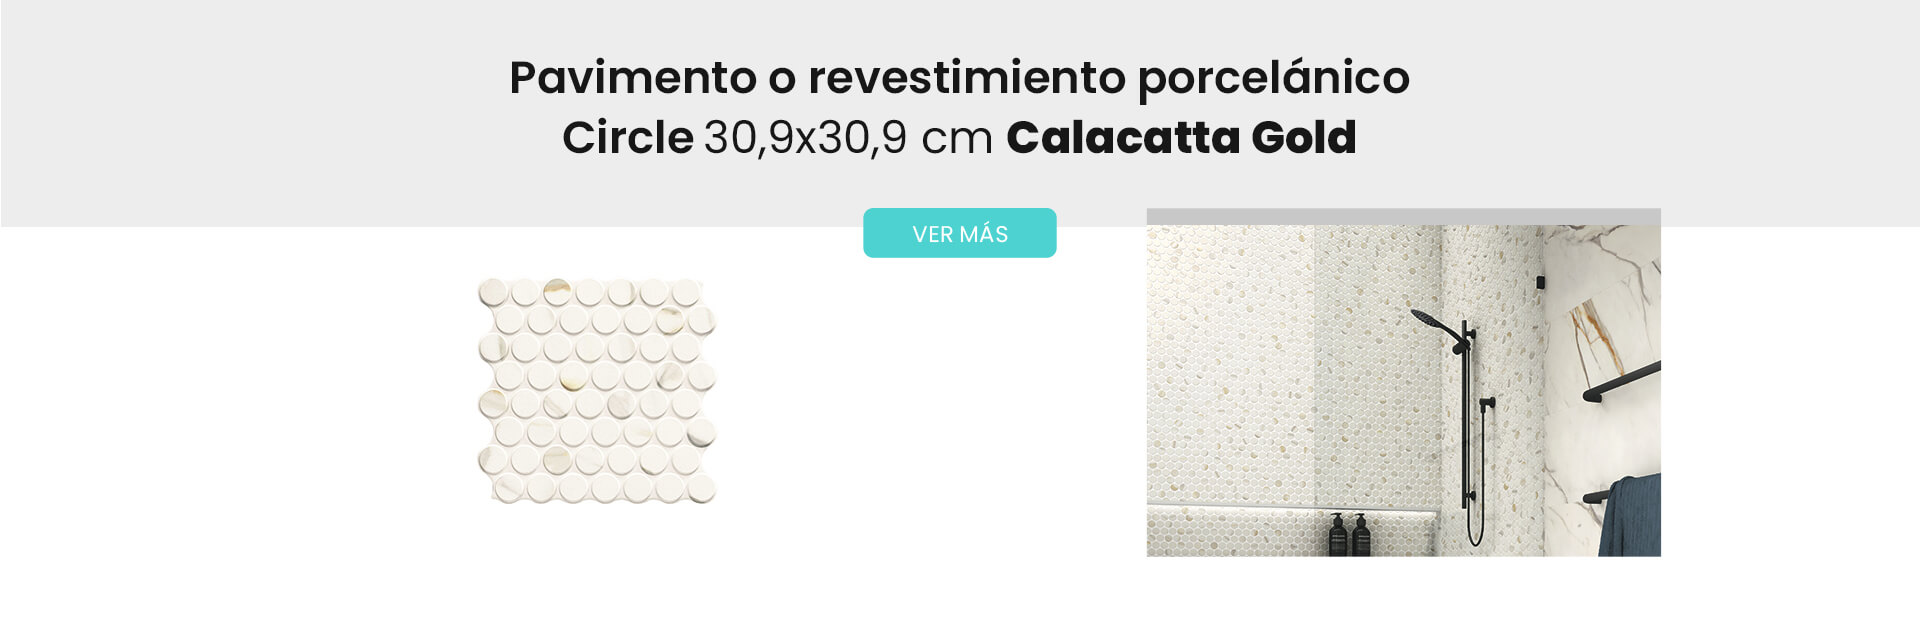 revestimiento porcelanico circle calacatta gold 30x30 cm adrihosan escritorio | Pavimentos porcelánicos y de gres